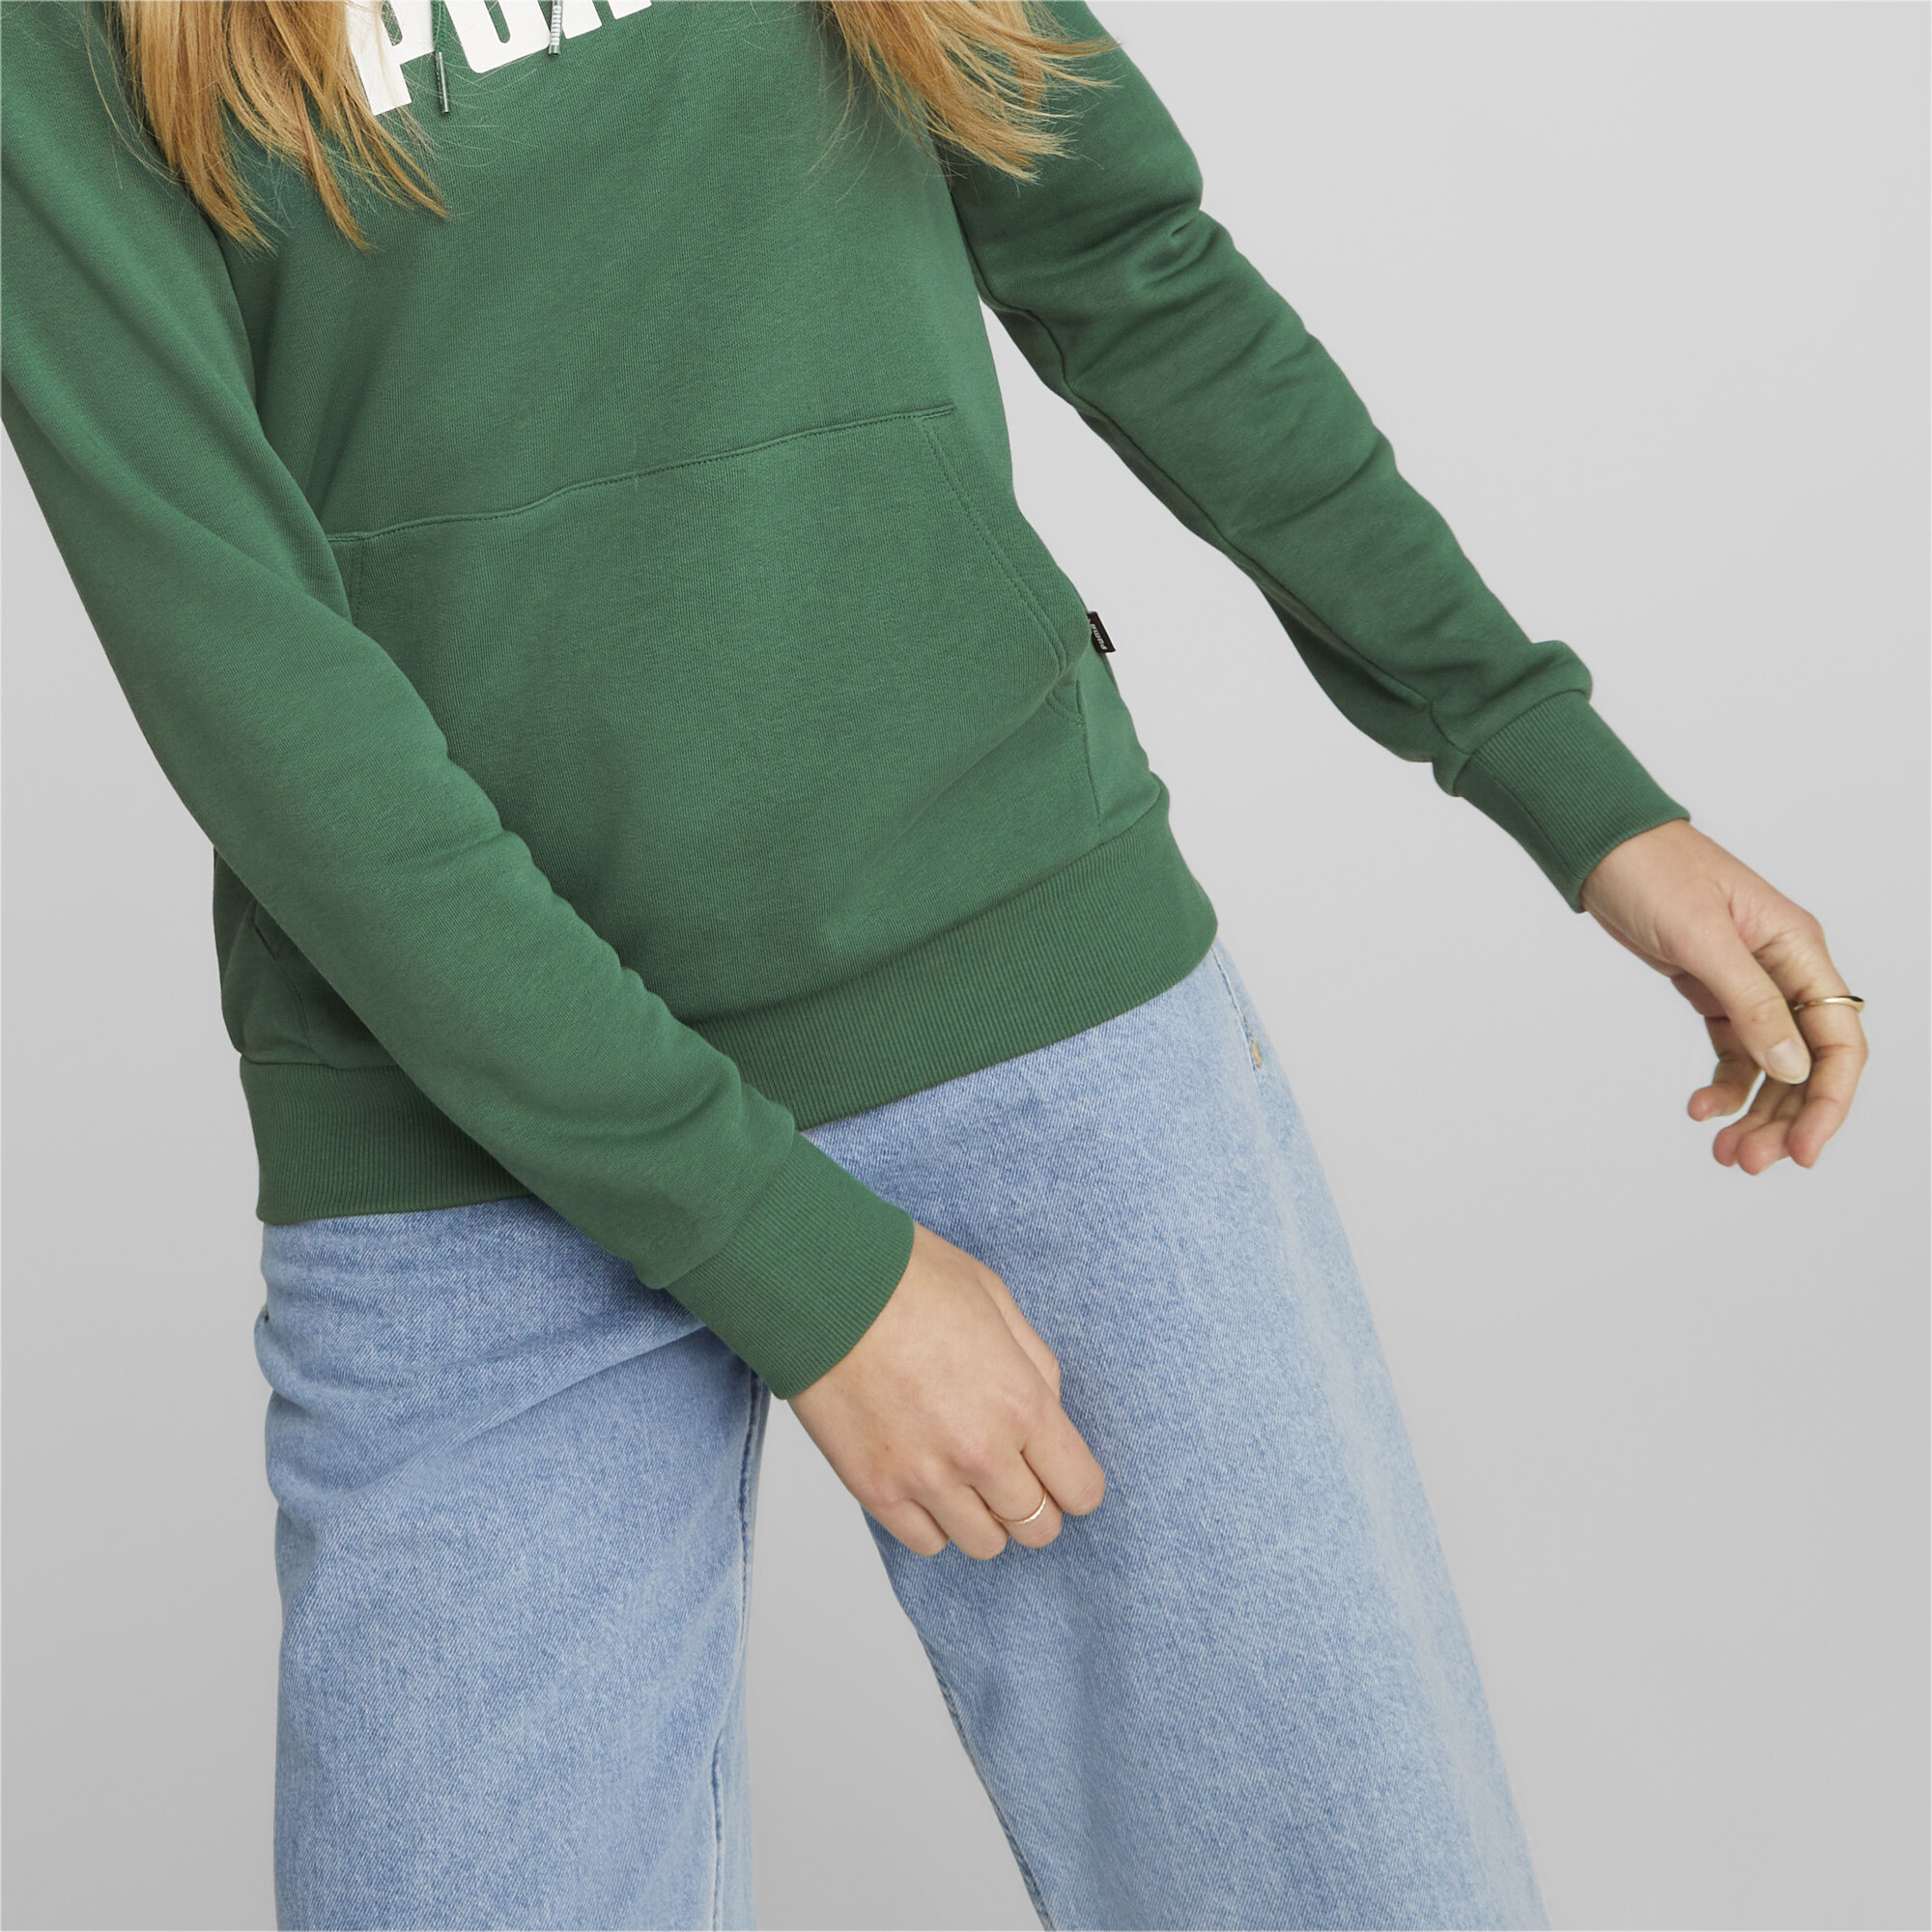 Women's Puma Essentials Big Logo's Hoodie, Green, Size S, Clothing